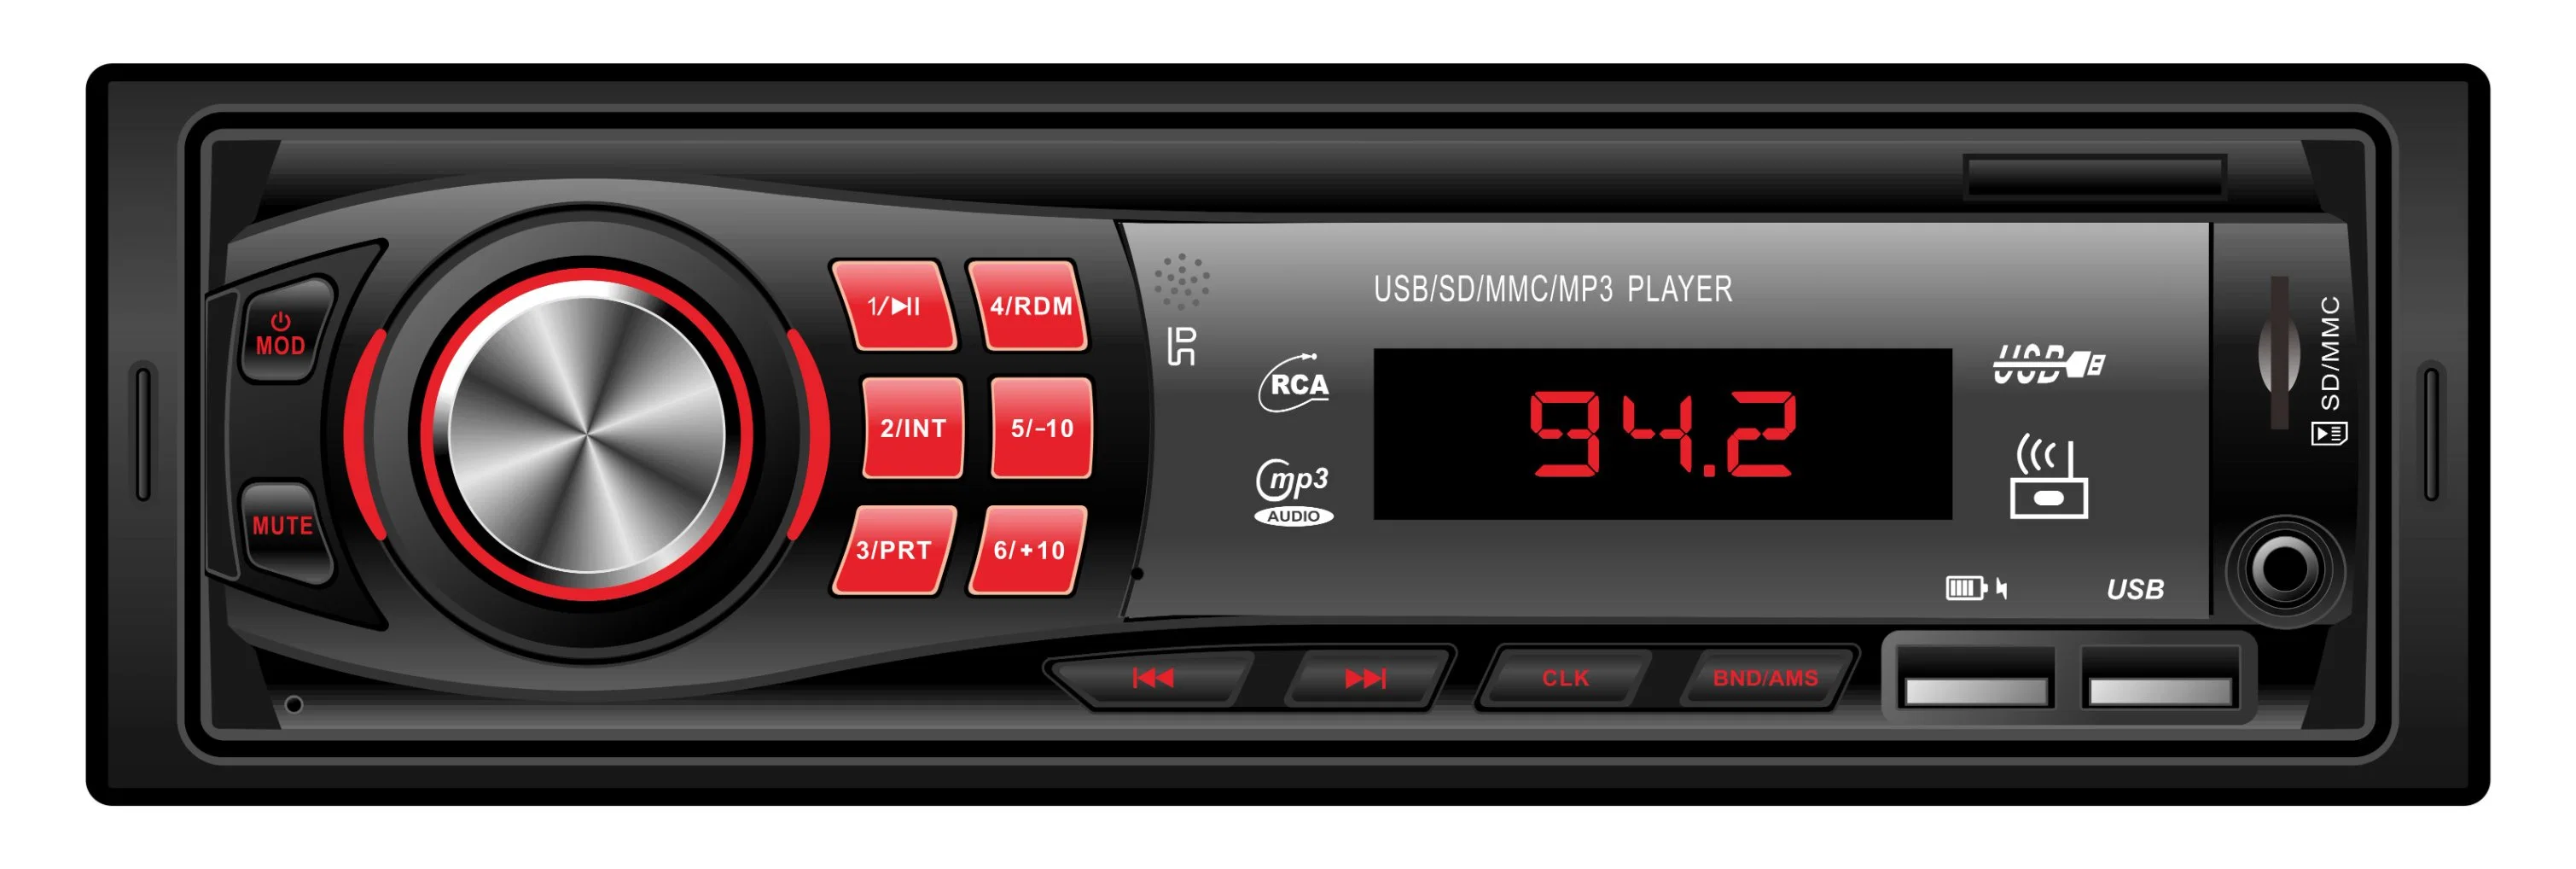 Receptor Multimédia Digital eletrônicos populares Car Audio player de MP3